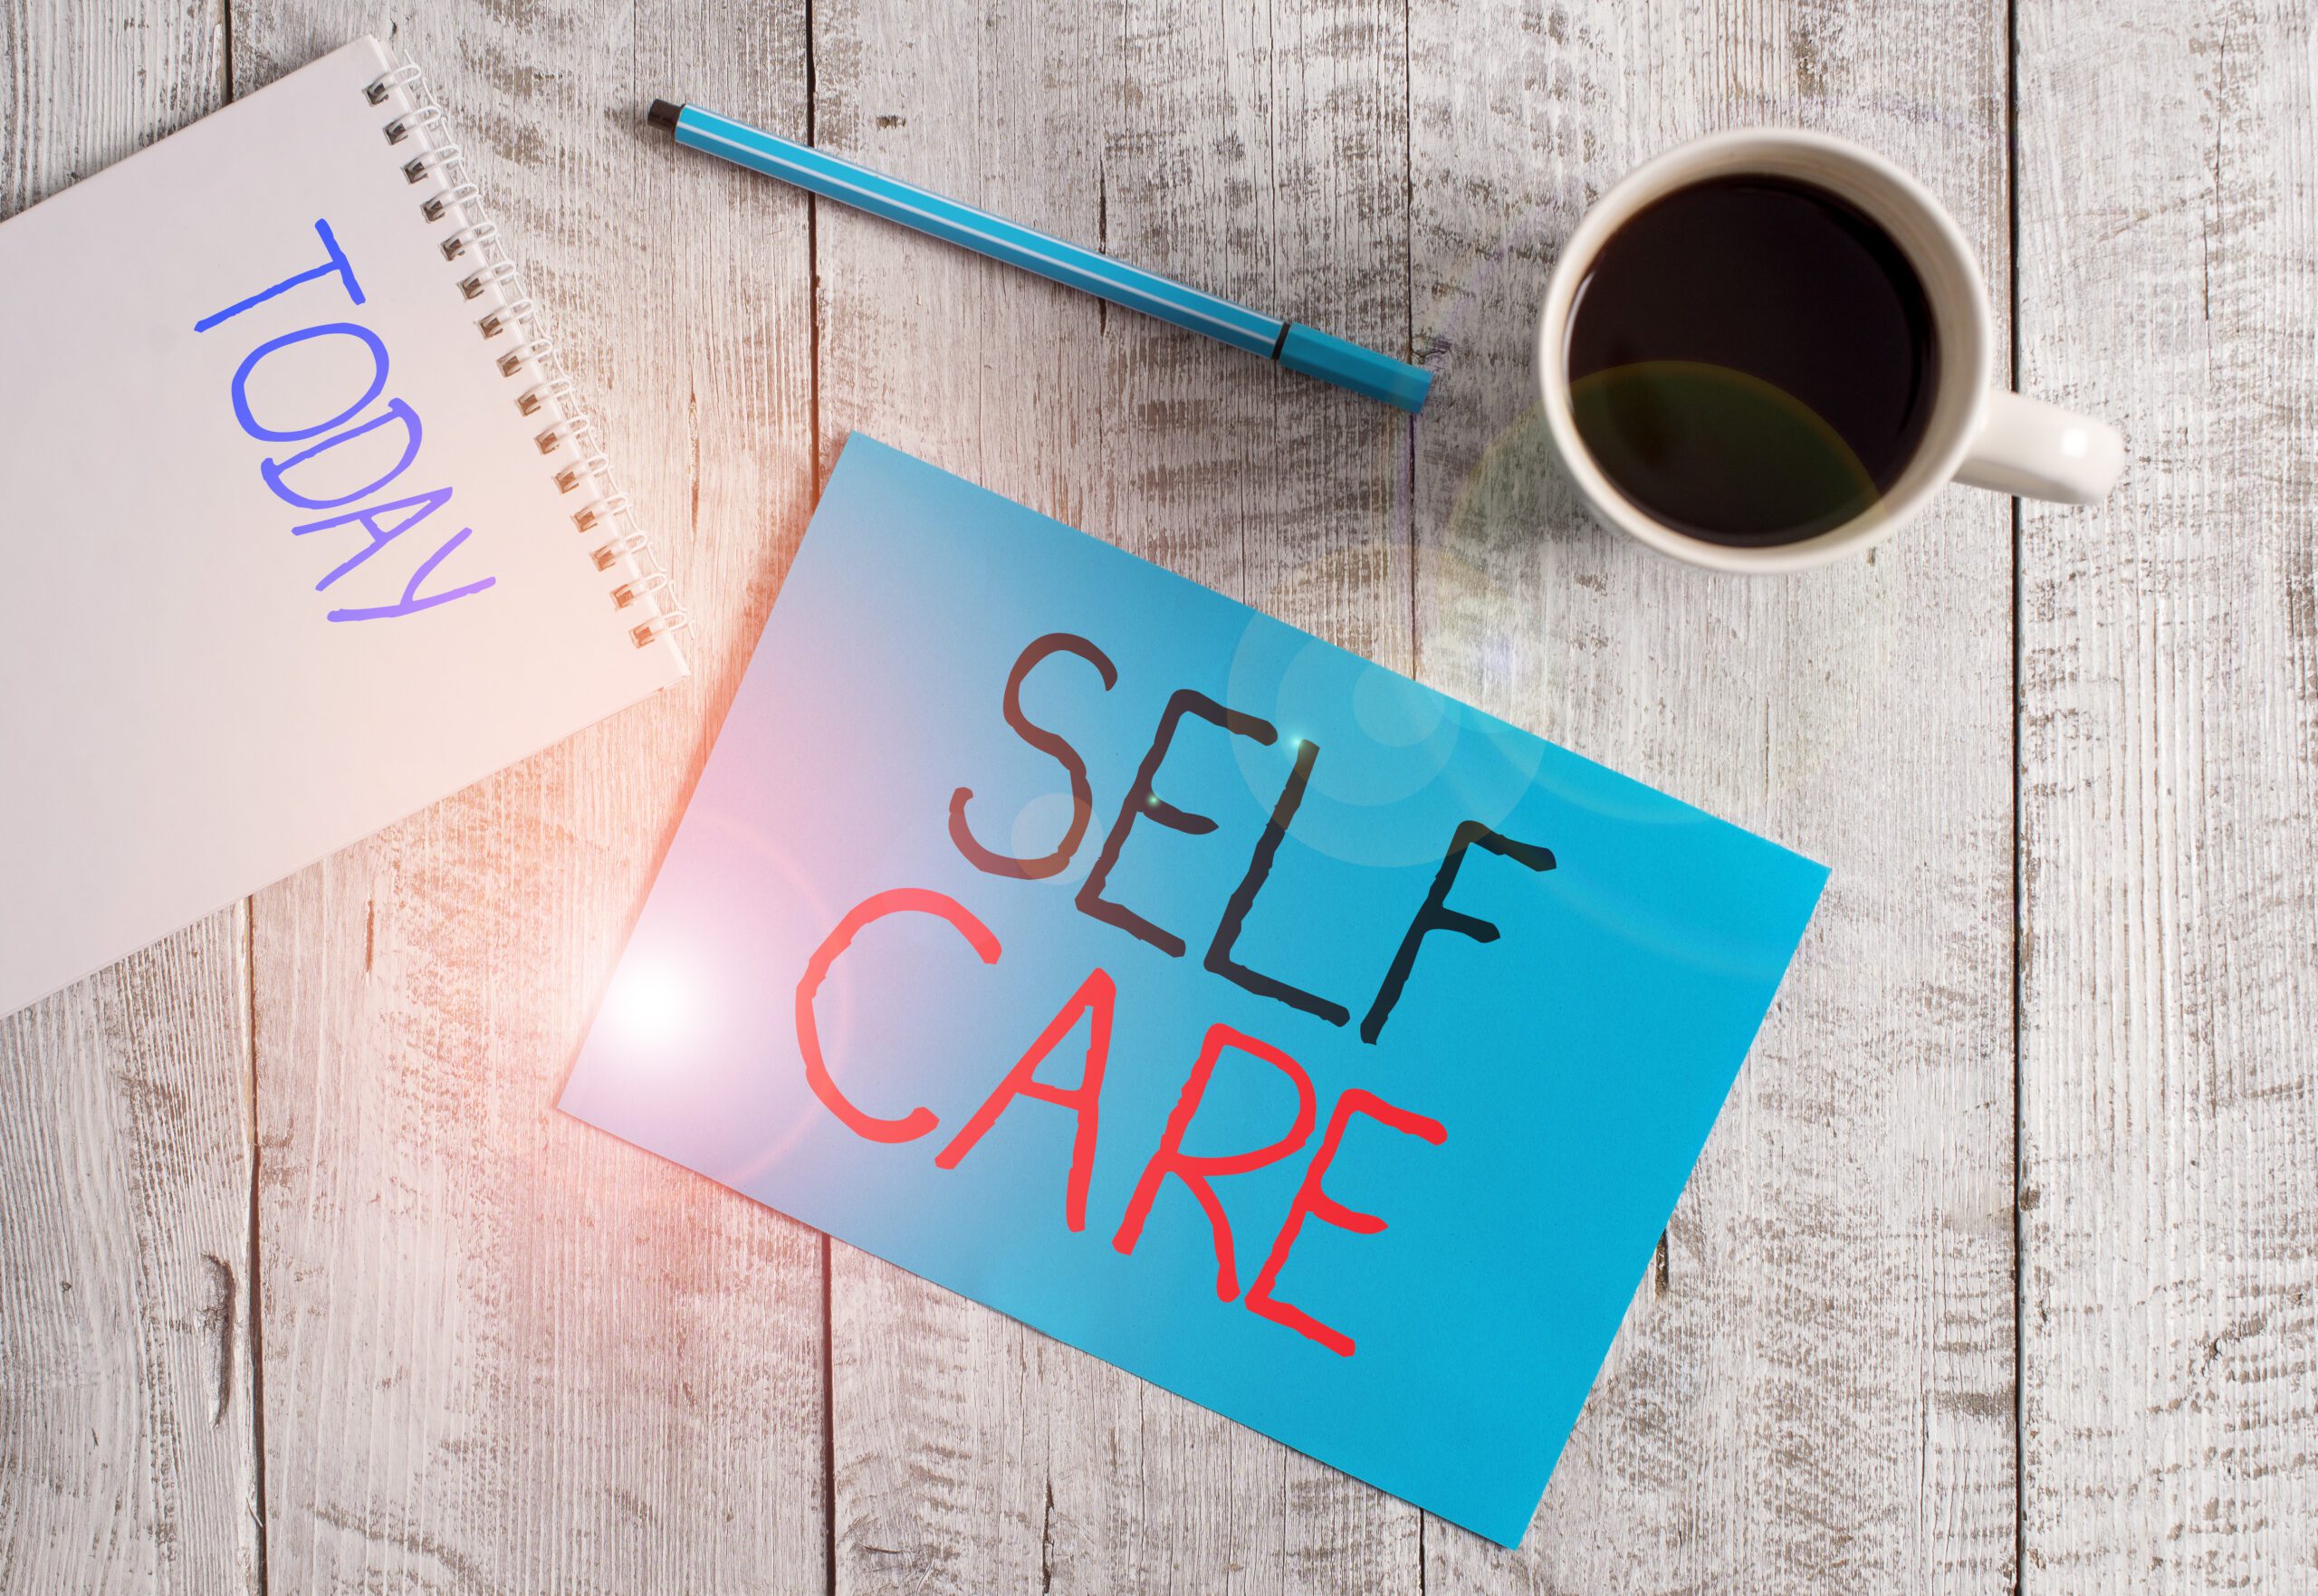 self care - art of self-care concept